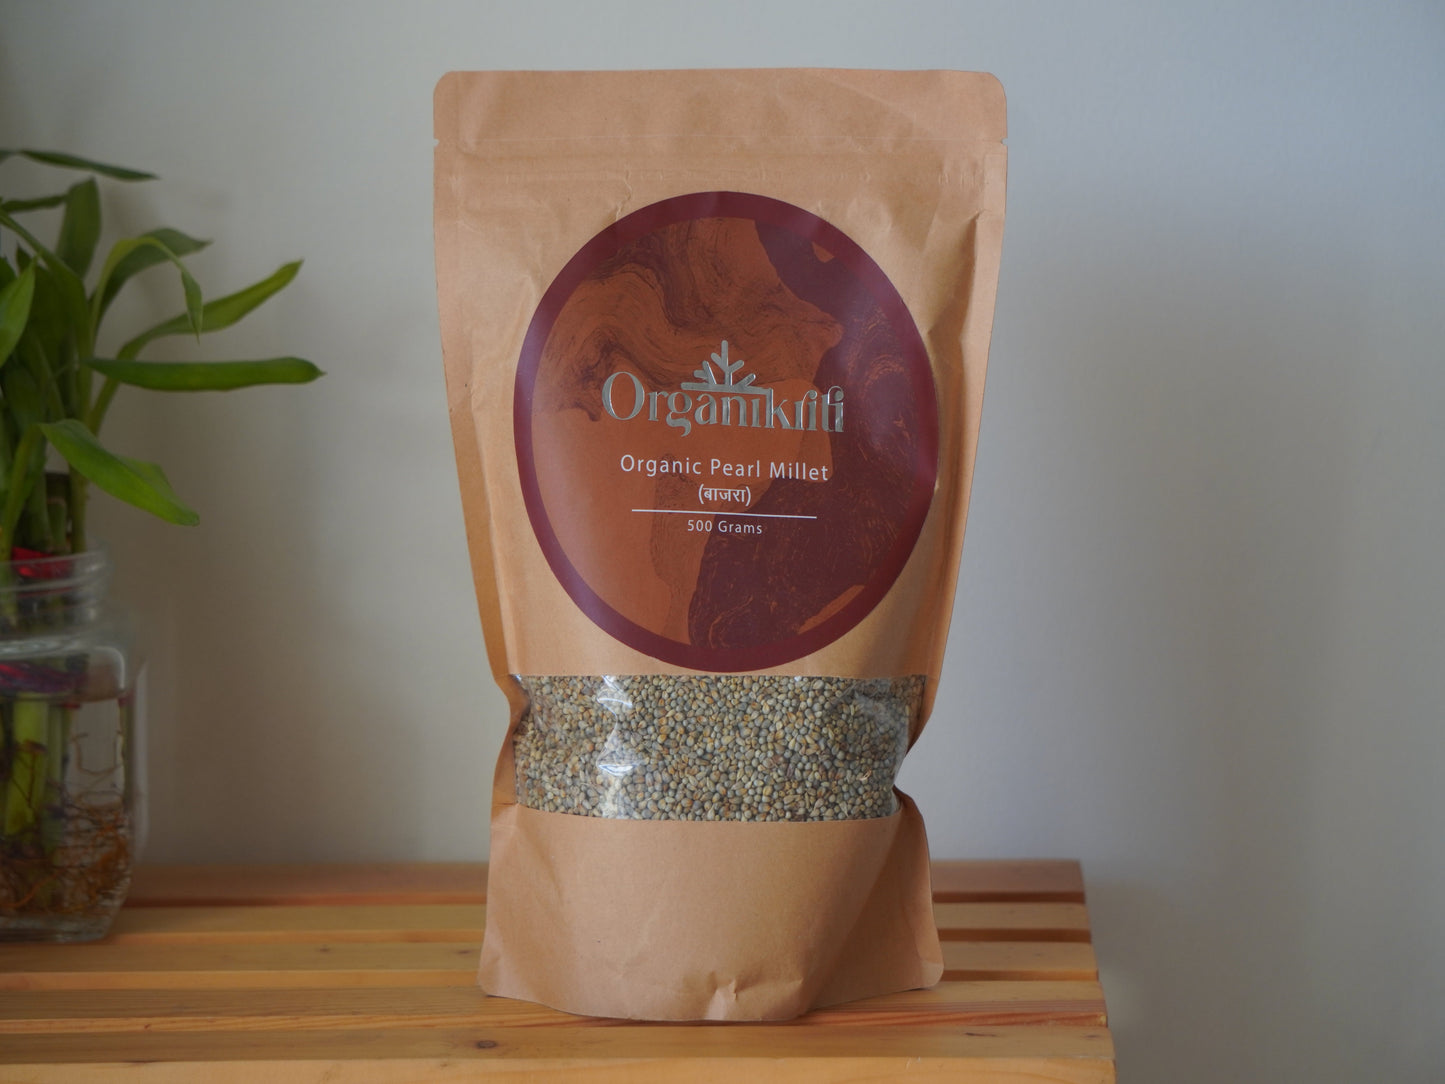 Organic Bajra / Pearl Millet Whole